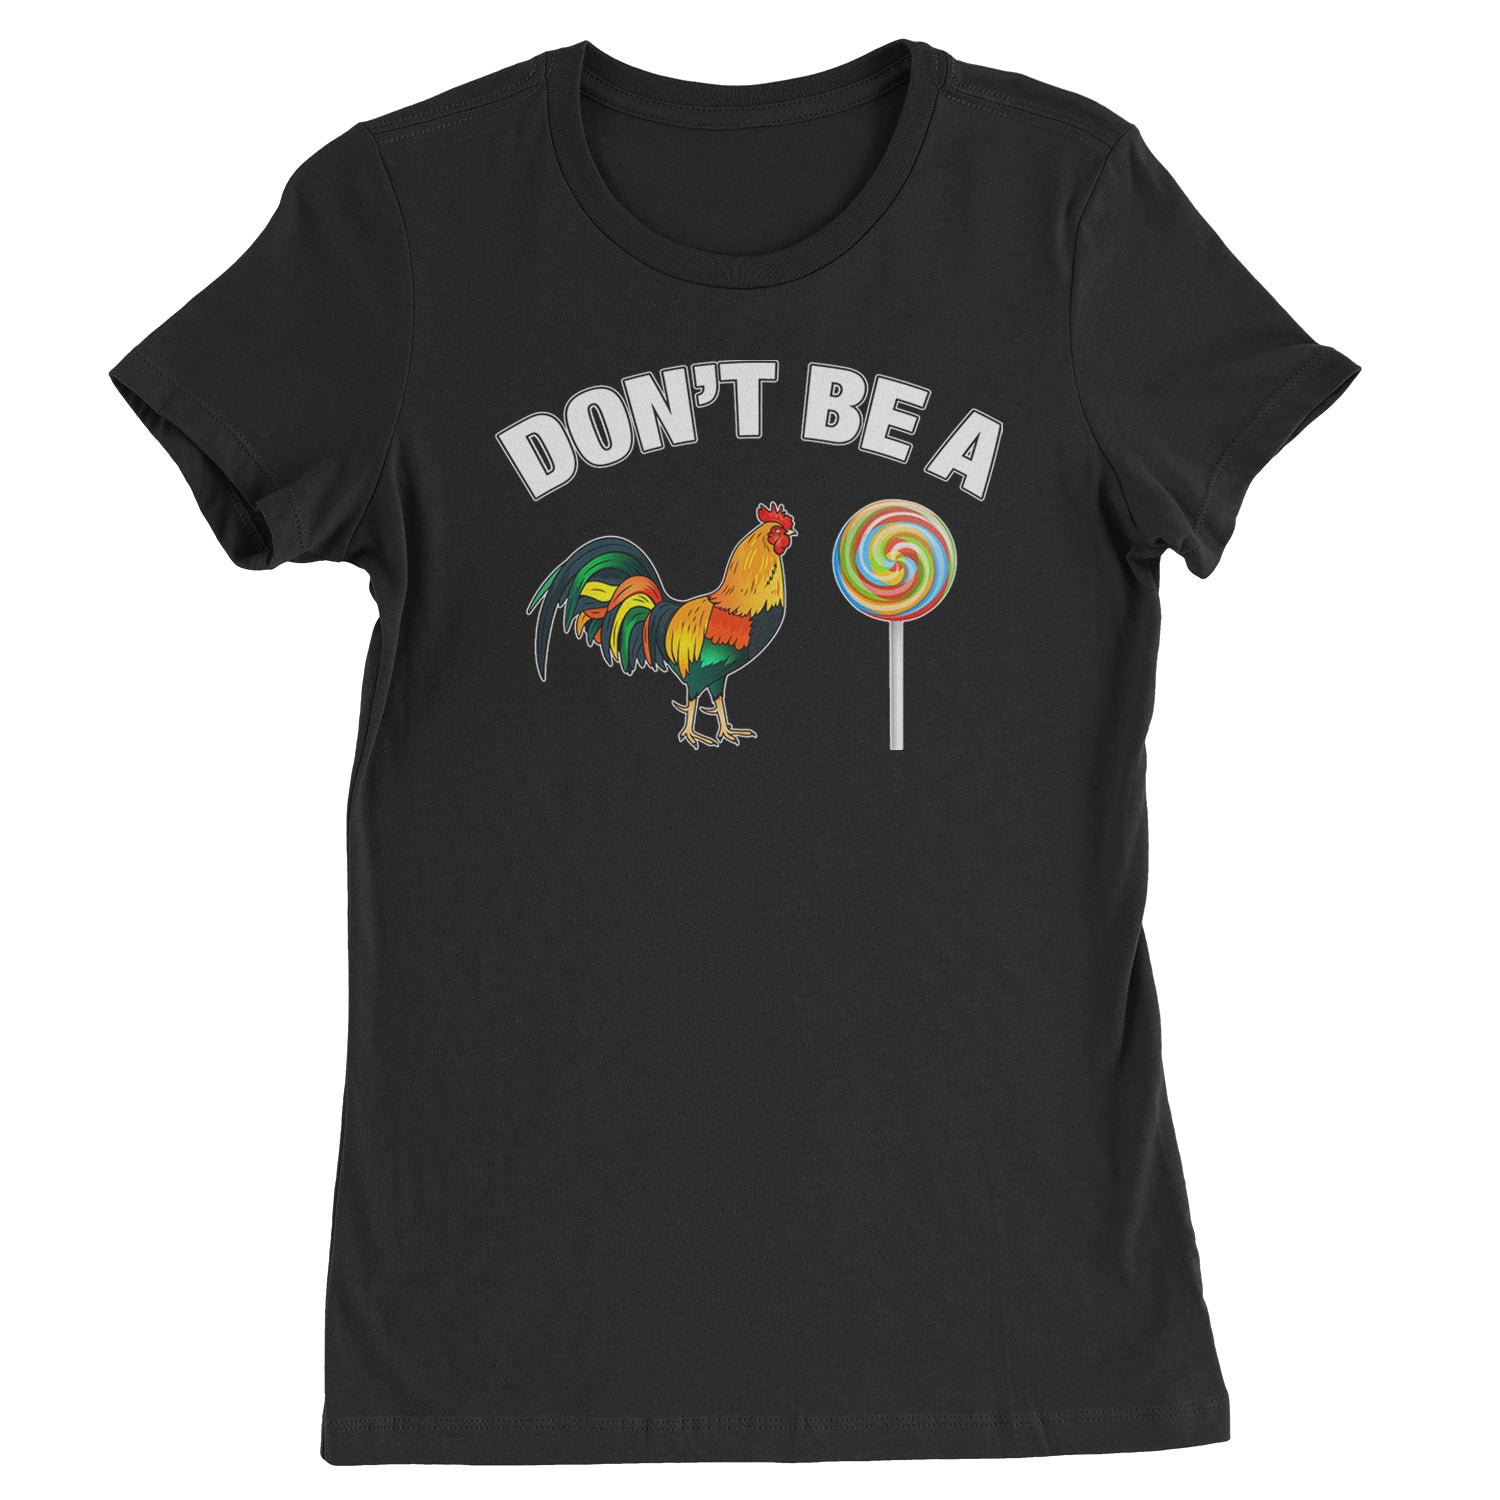 Don't Be A C-ck Sucker Funny Sarcastic Womens T-shirt